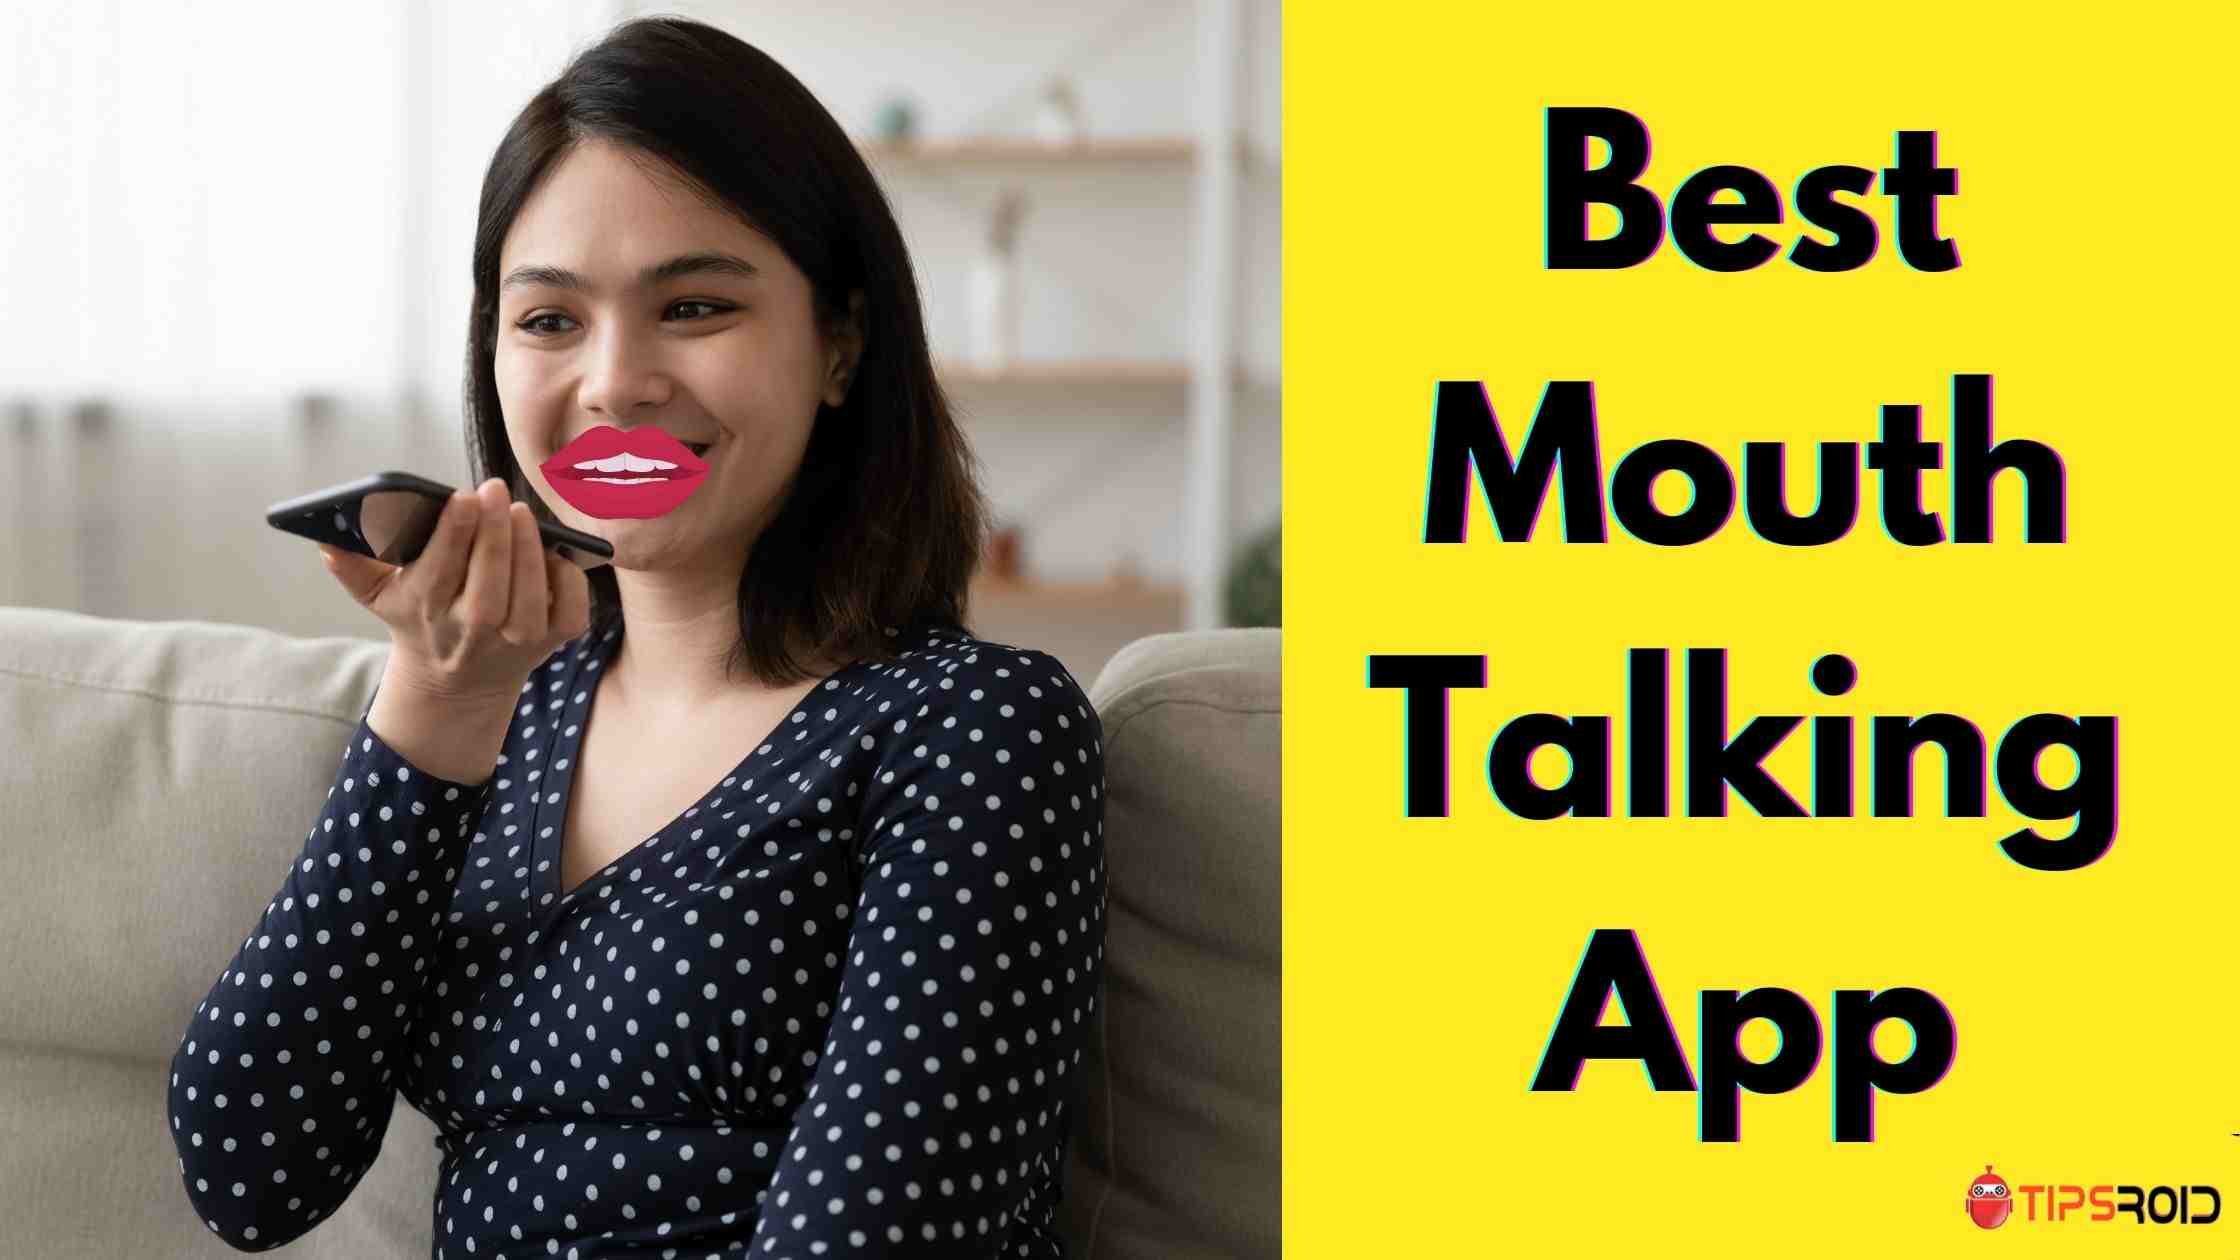 Mouth Talking App